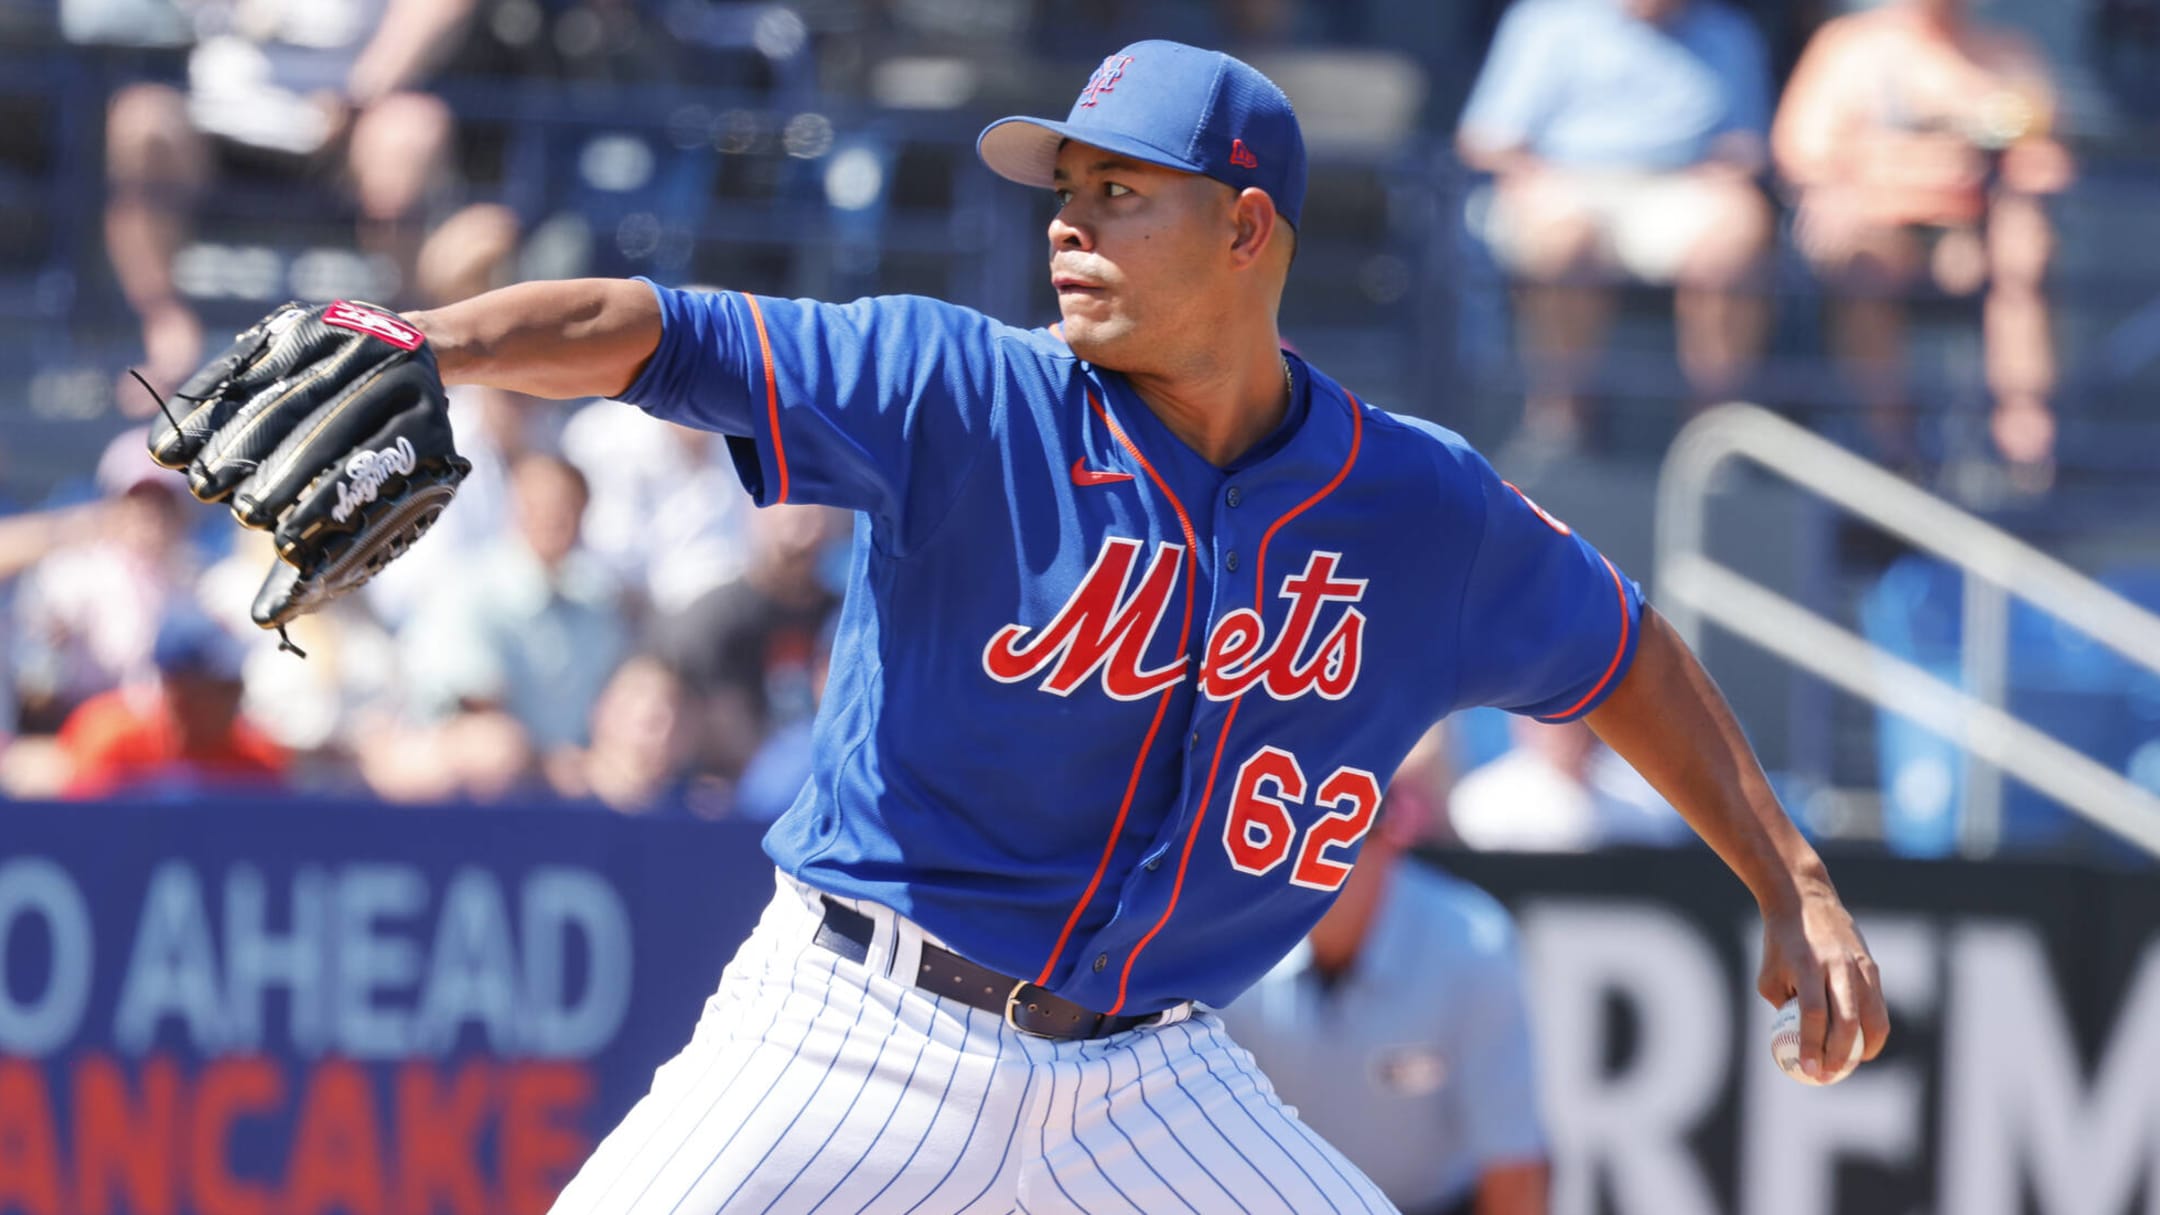 NY Mets sign star Japanese pitcher Kodai Senga to $75M deal